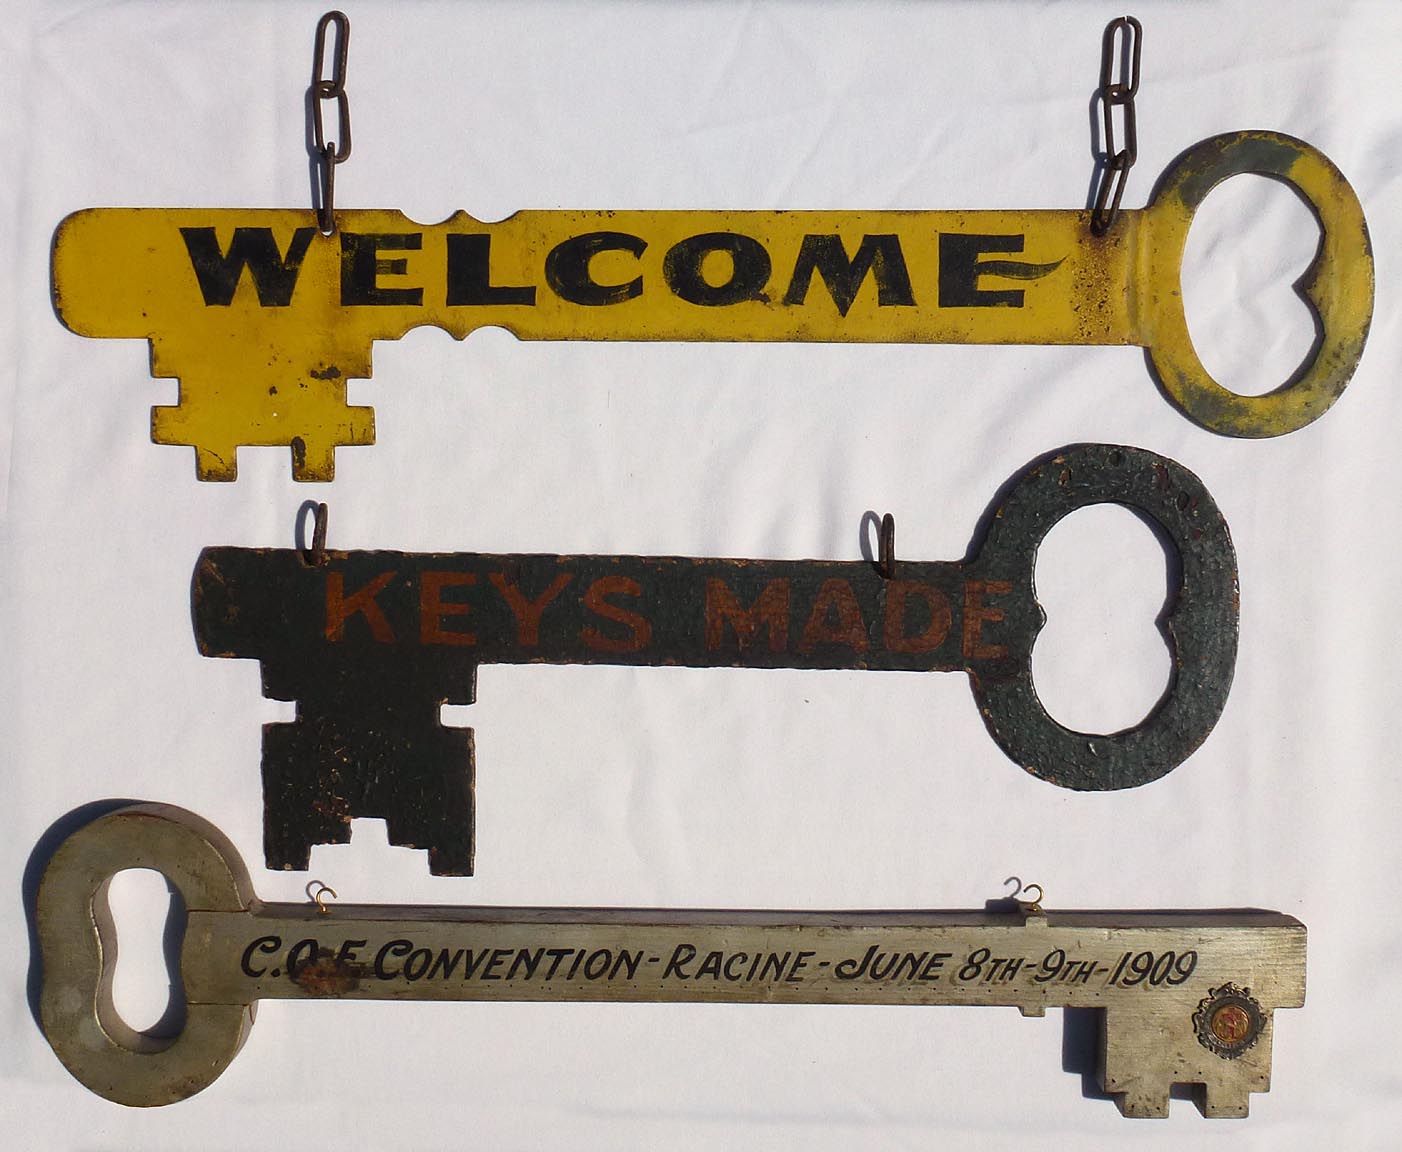 Three large key signs